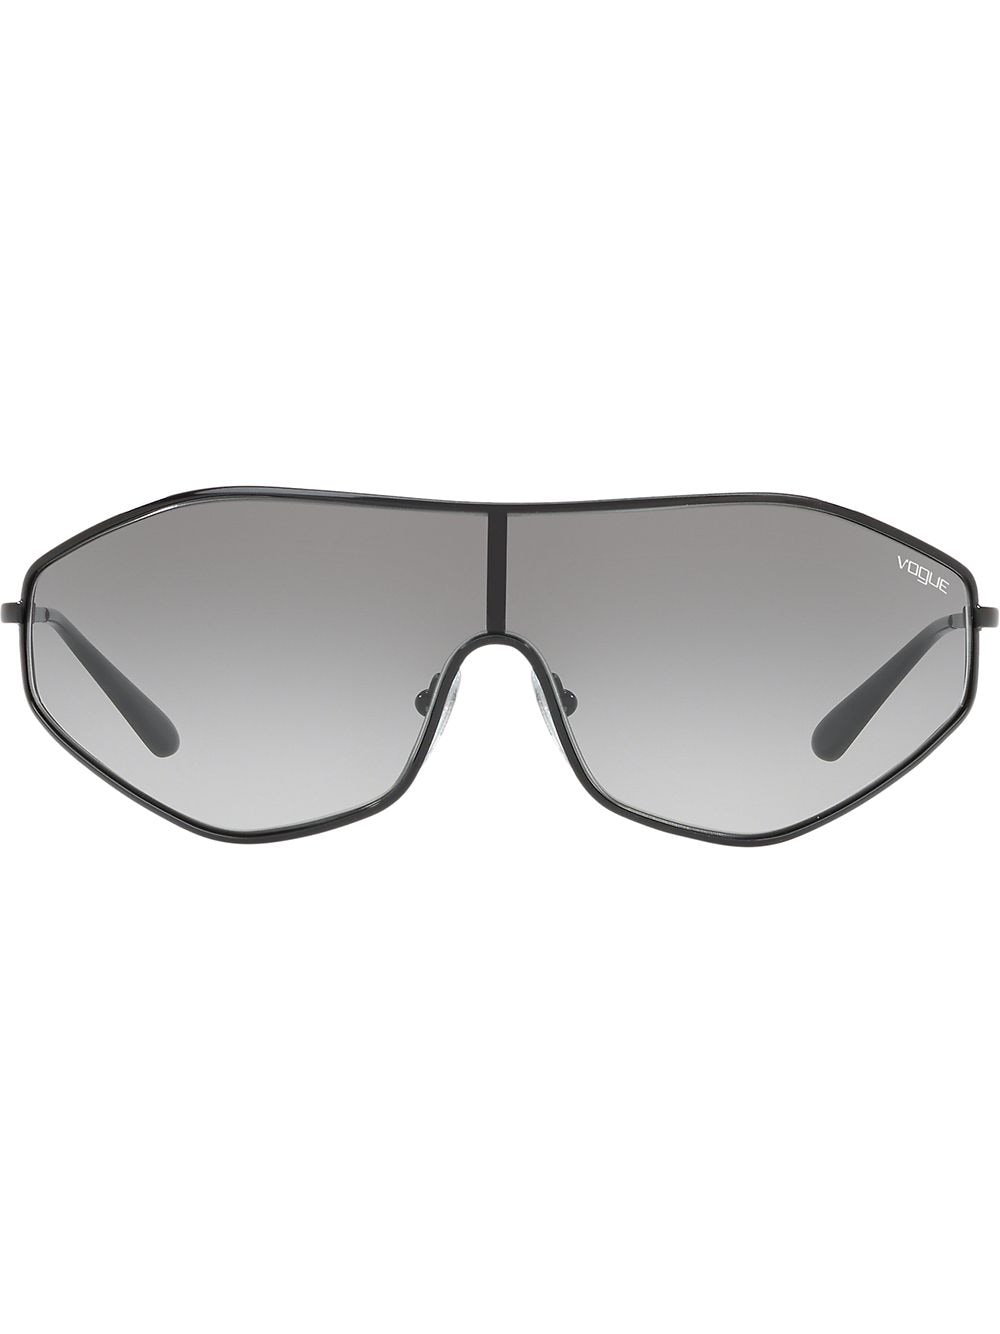 Vogue Eyewear G-vision Sunglasses In Black